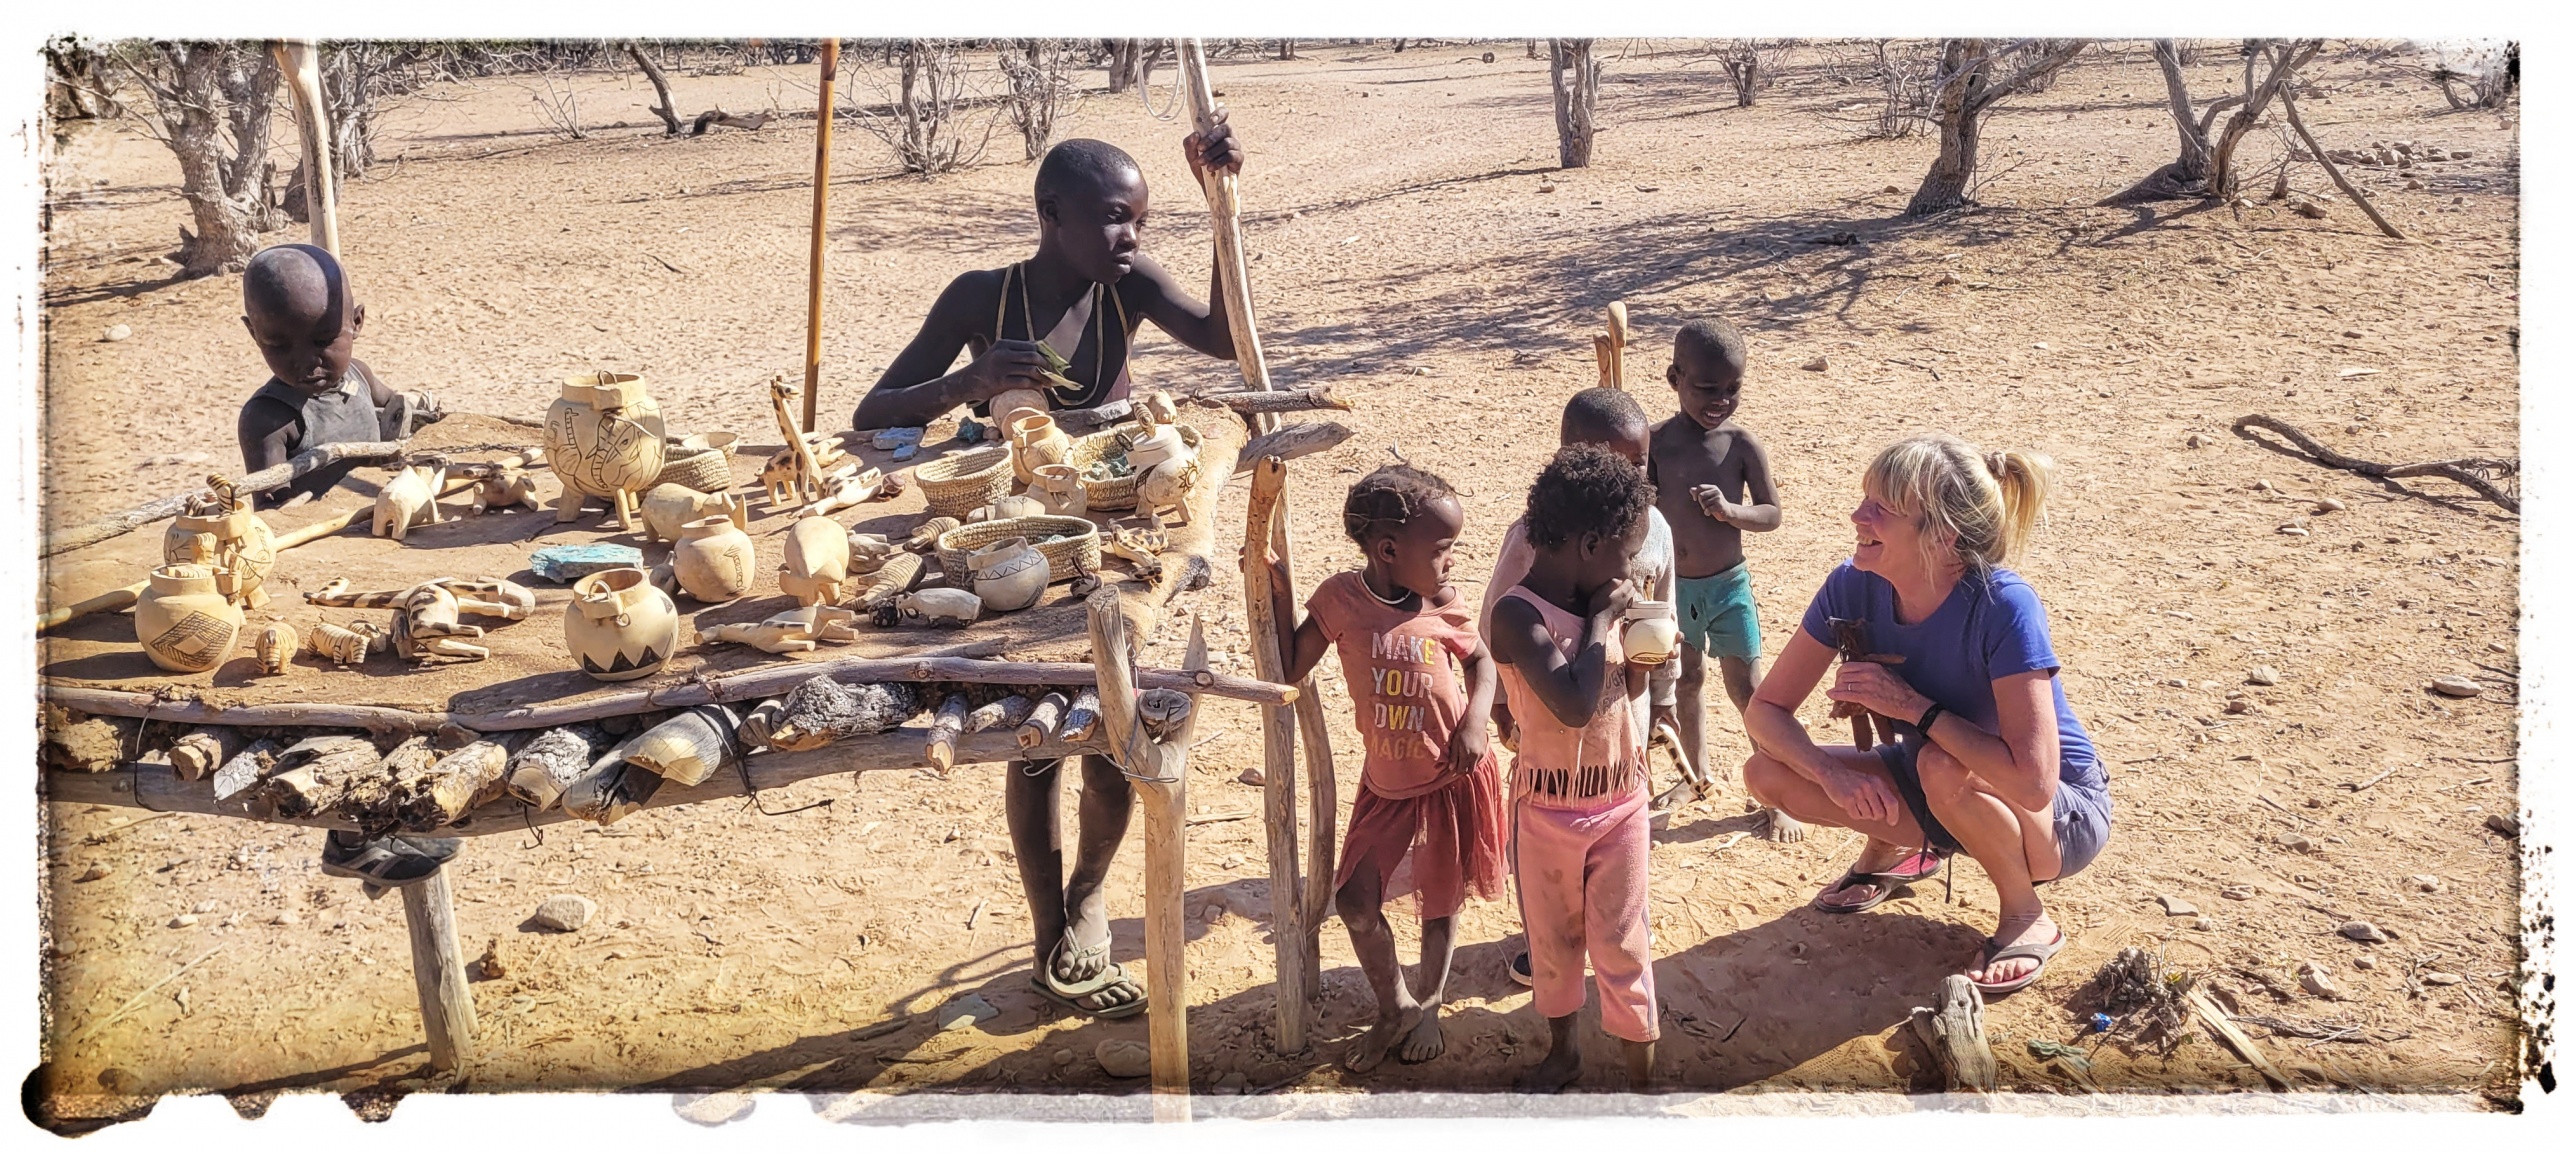 tribal children selling tourists stuff deep into the namibian desert